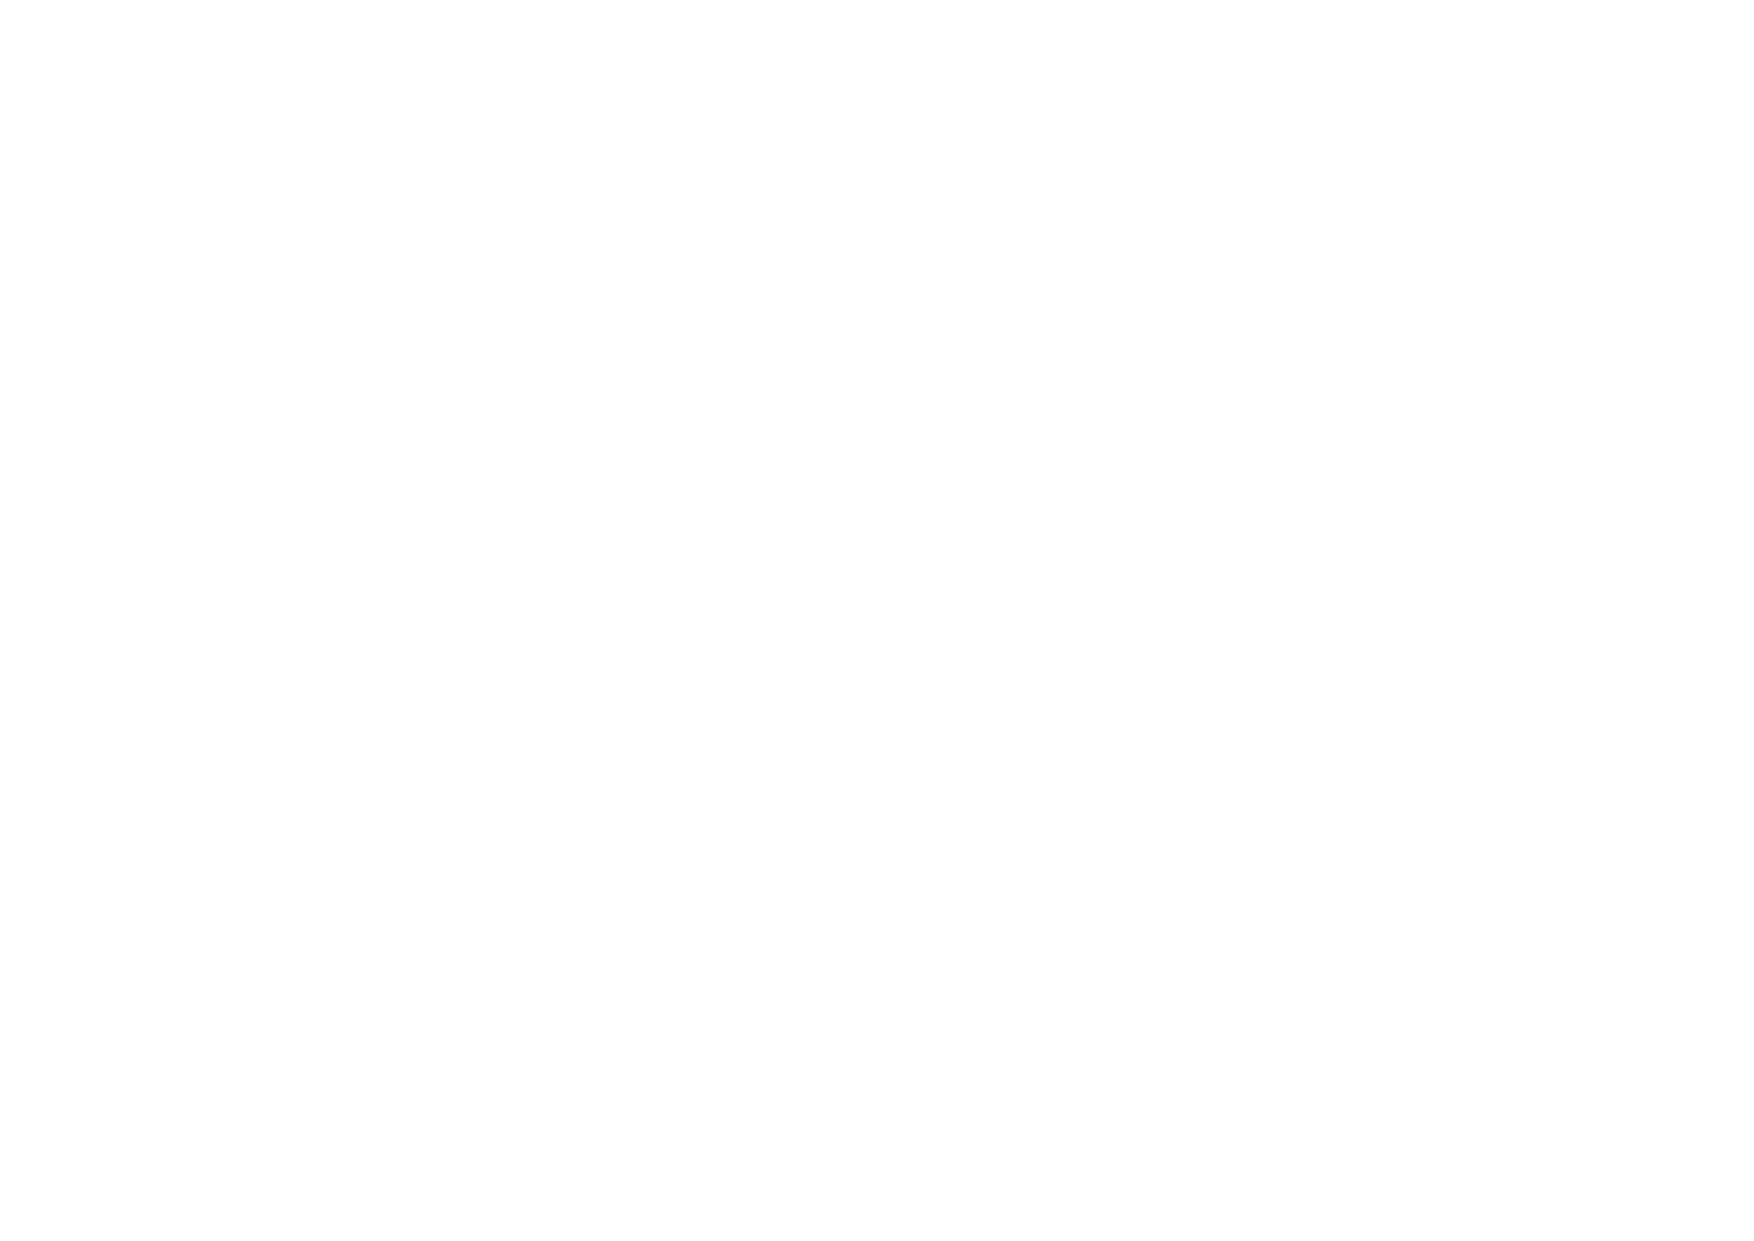 Kew Green Hotels